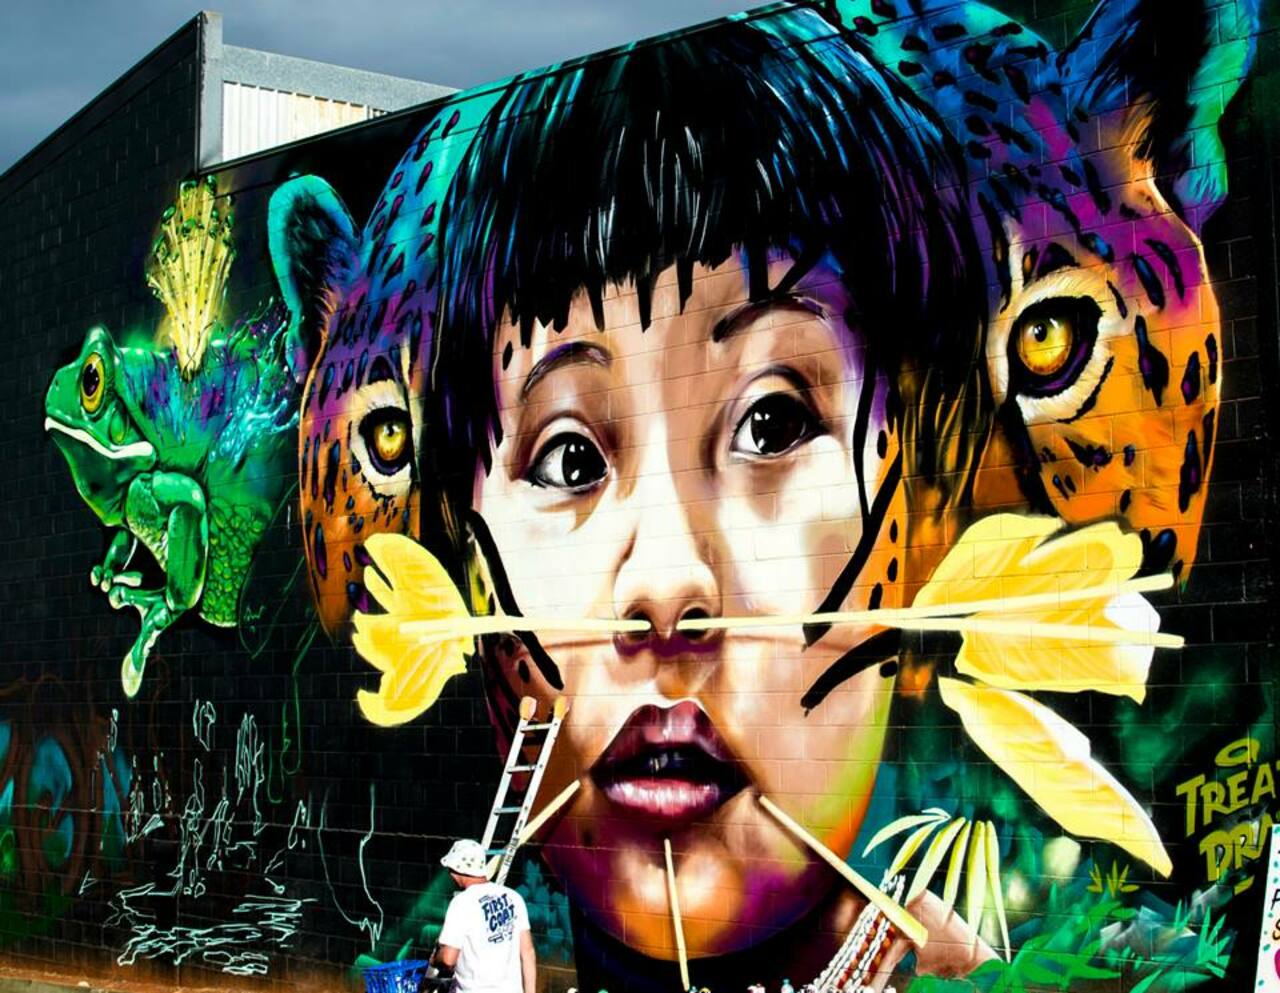 RT @rowen_nick: #streetart #urbanart #graffiti #art #urban #streetphotography #mural #wallporn #urbanwalls #graffitiporn #picoftheday http://t.co/kDigEs5Vqq